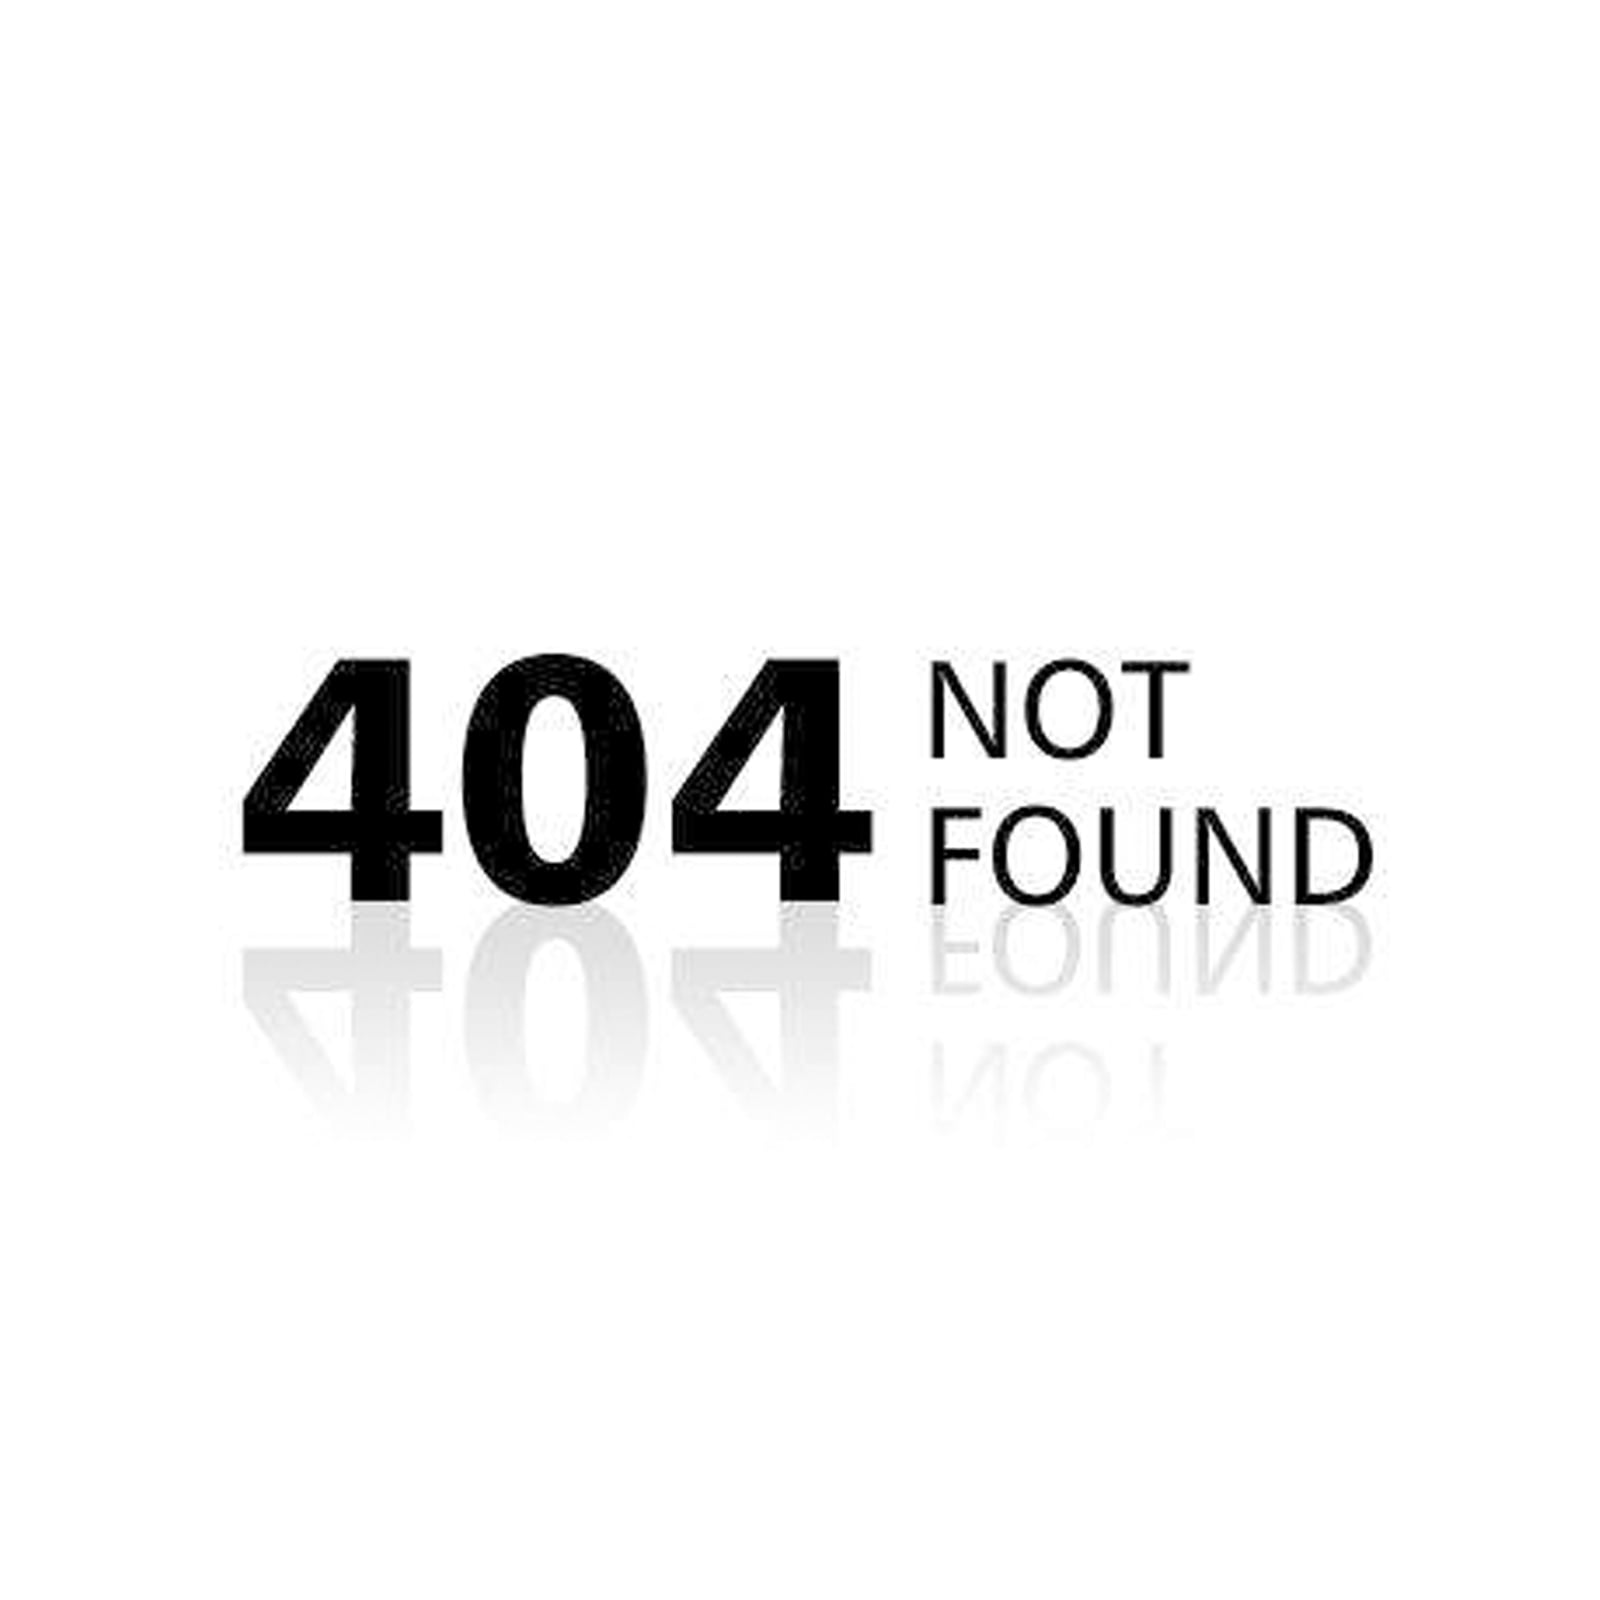 Variable not found. 404 Not found. Логотип 404. 404 Нот фаунд. 404 Not found картинка.